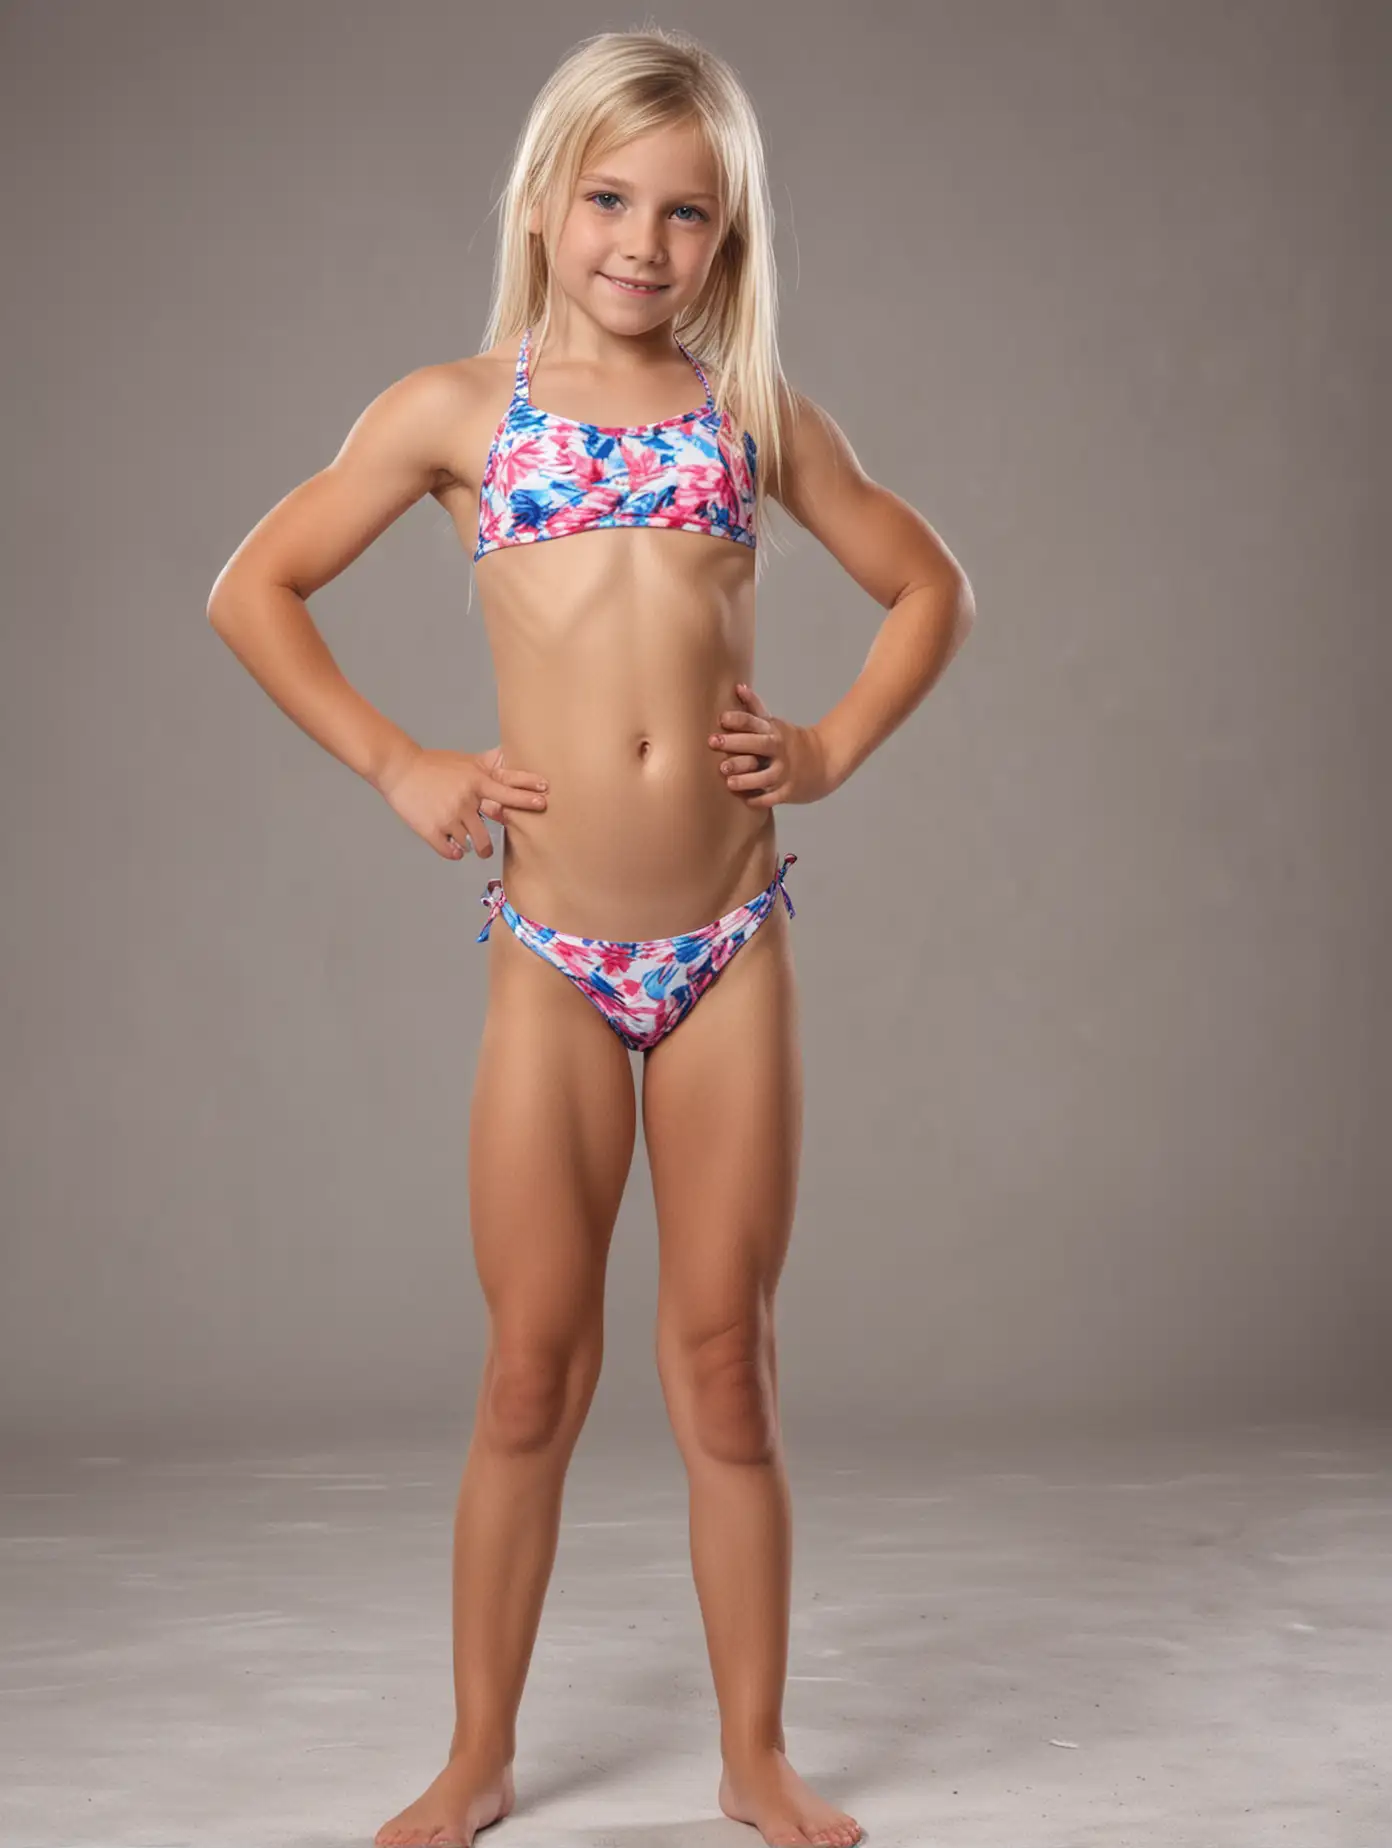 white blonde 8 year old athletic girl in bikini, flexing leg muscles